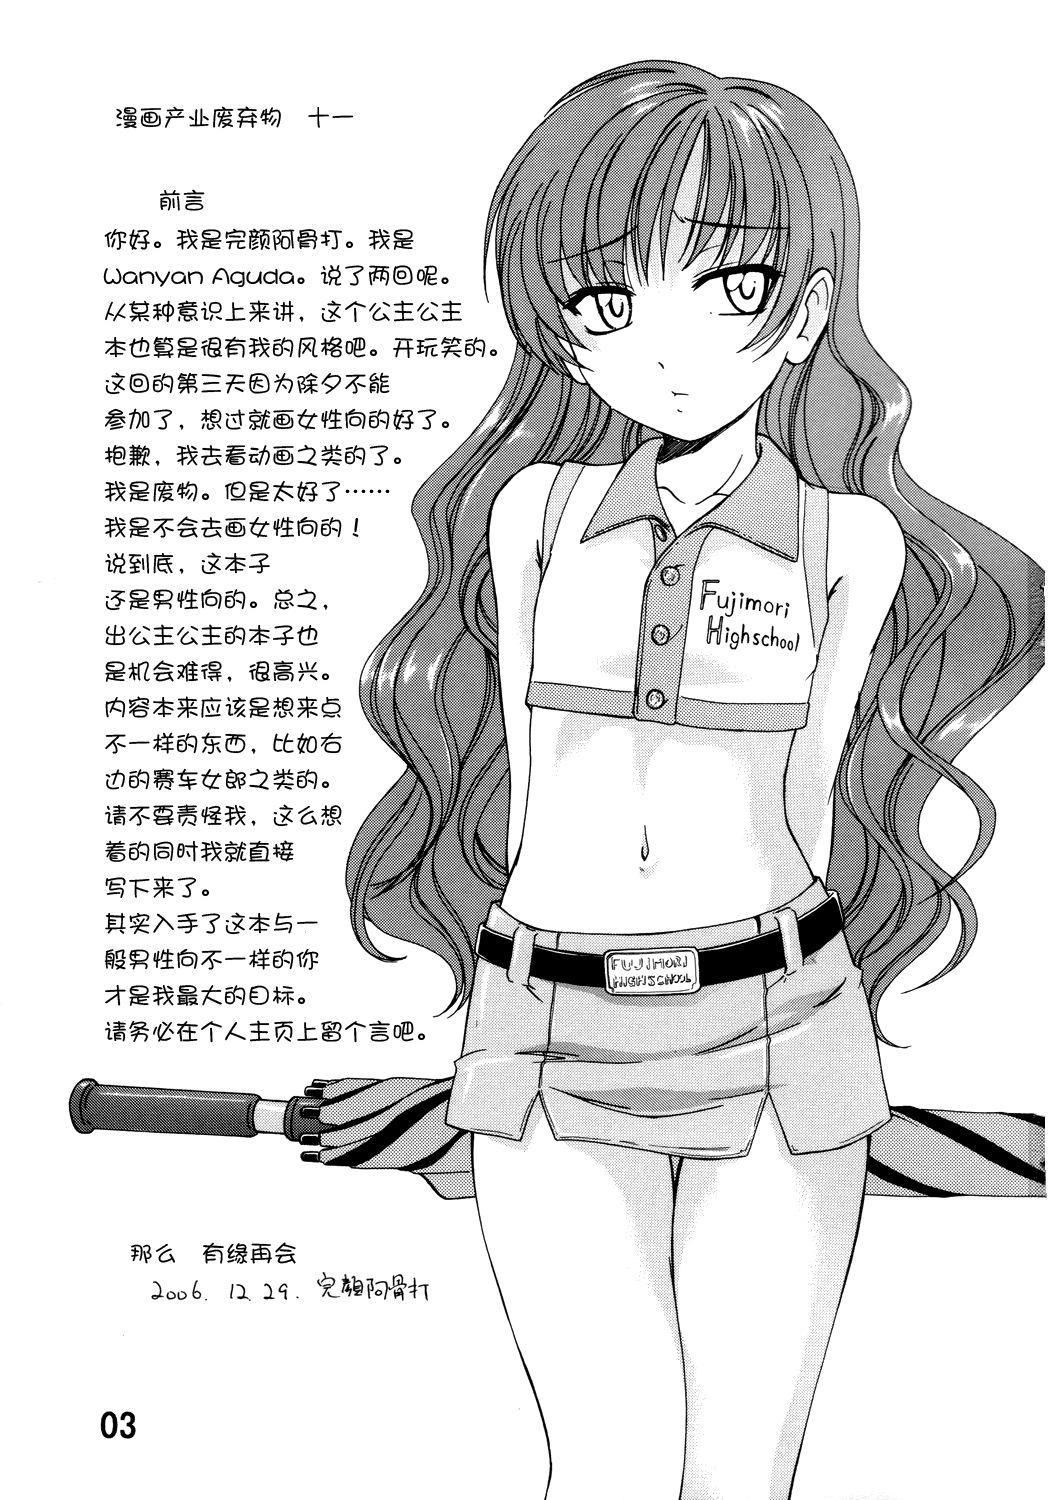 Mature Woman Manga Sangyou Haikibutsu 11 - Comic Industrial Wastes 11 - Princess princess Africa - Page 2